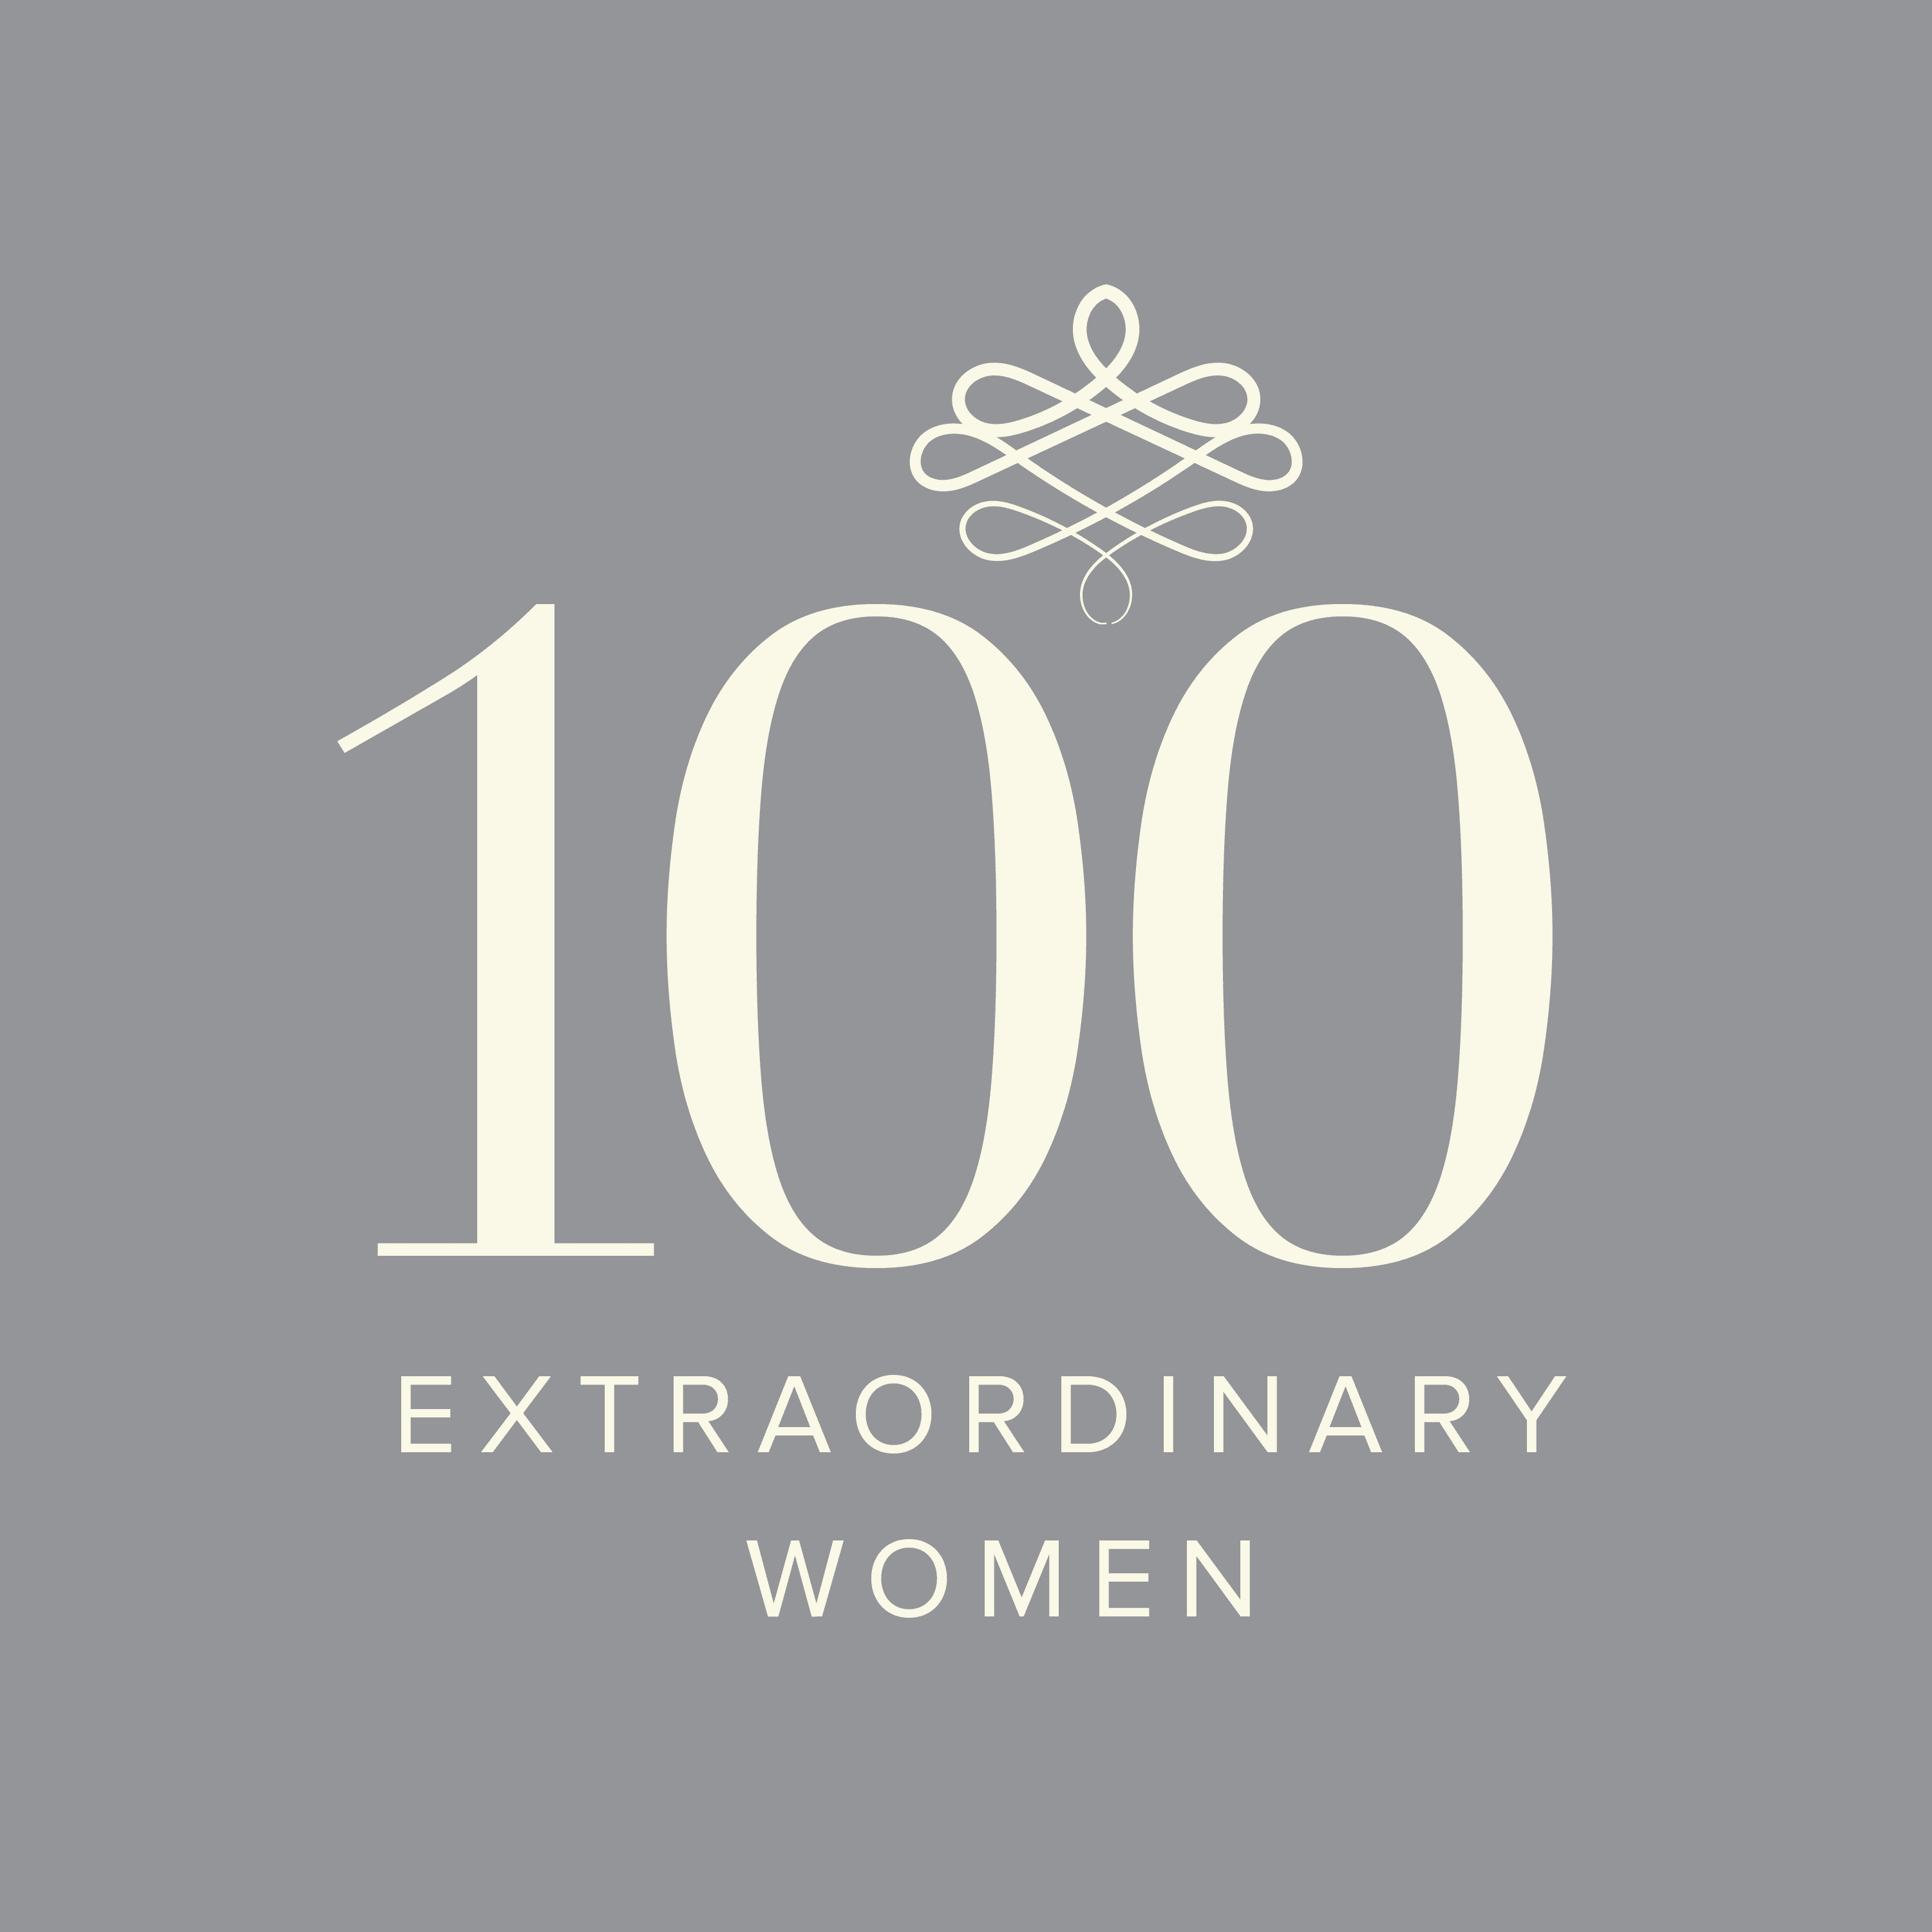 100 Extraordinary Women logo